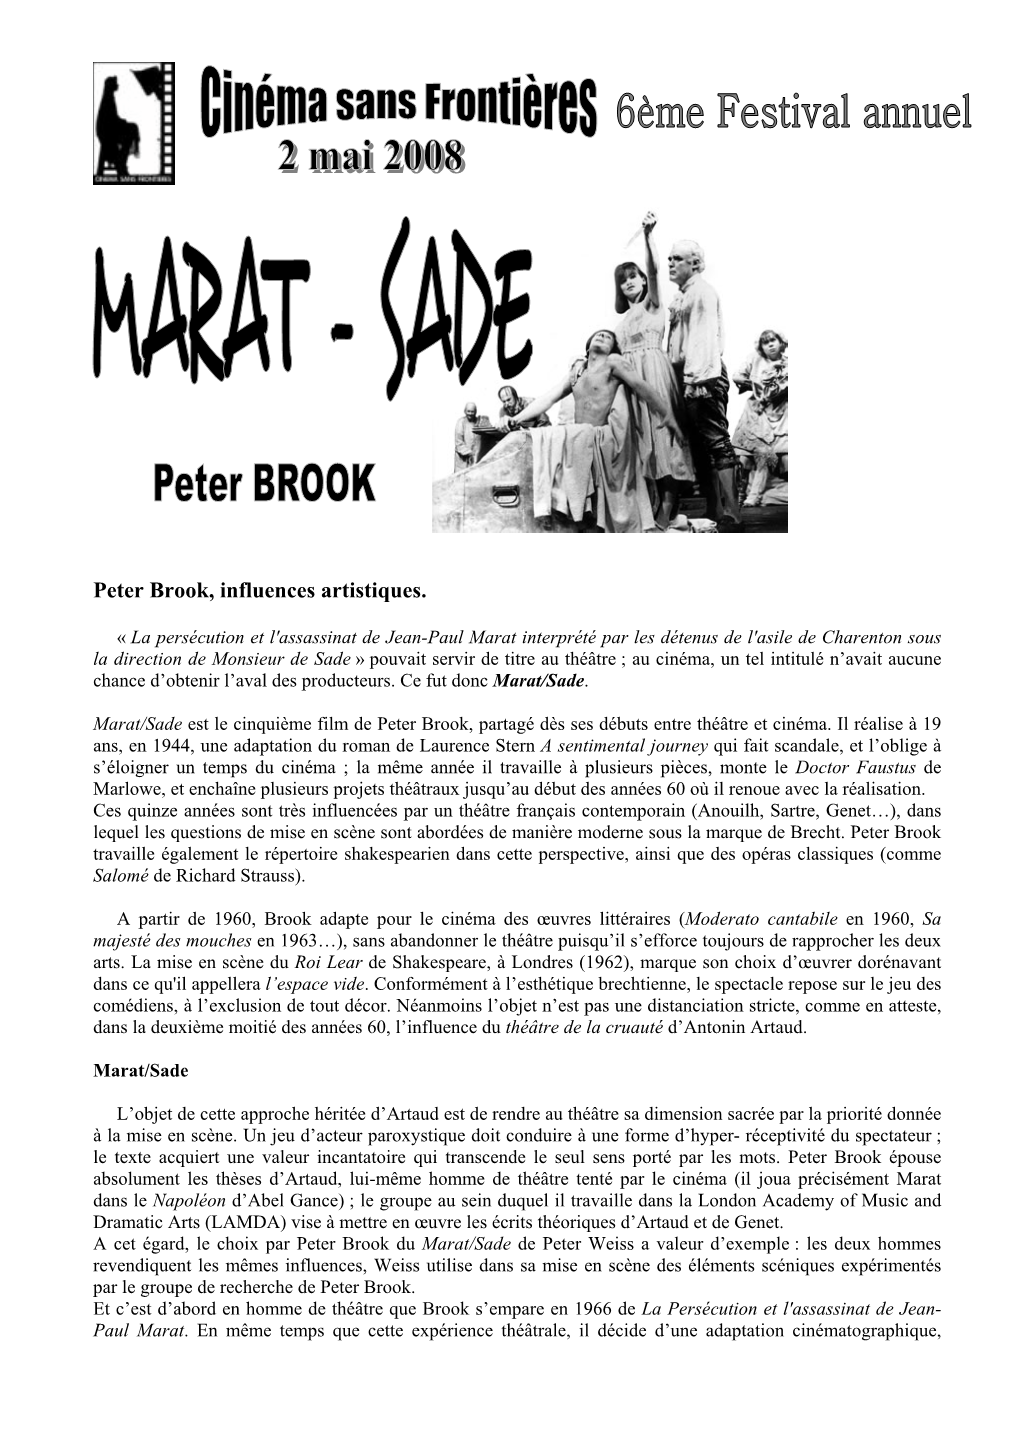 Peter Brook, Influences Artistiques